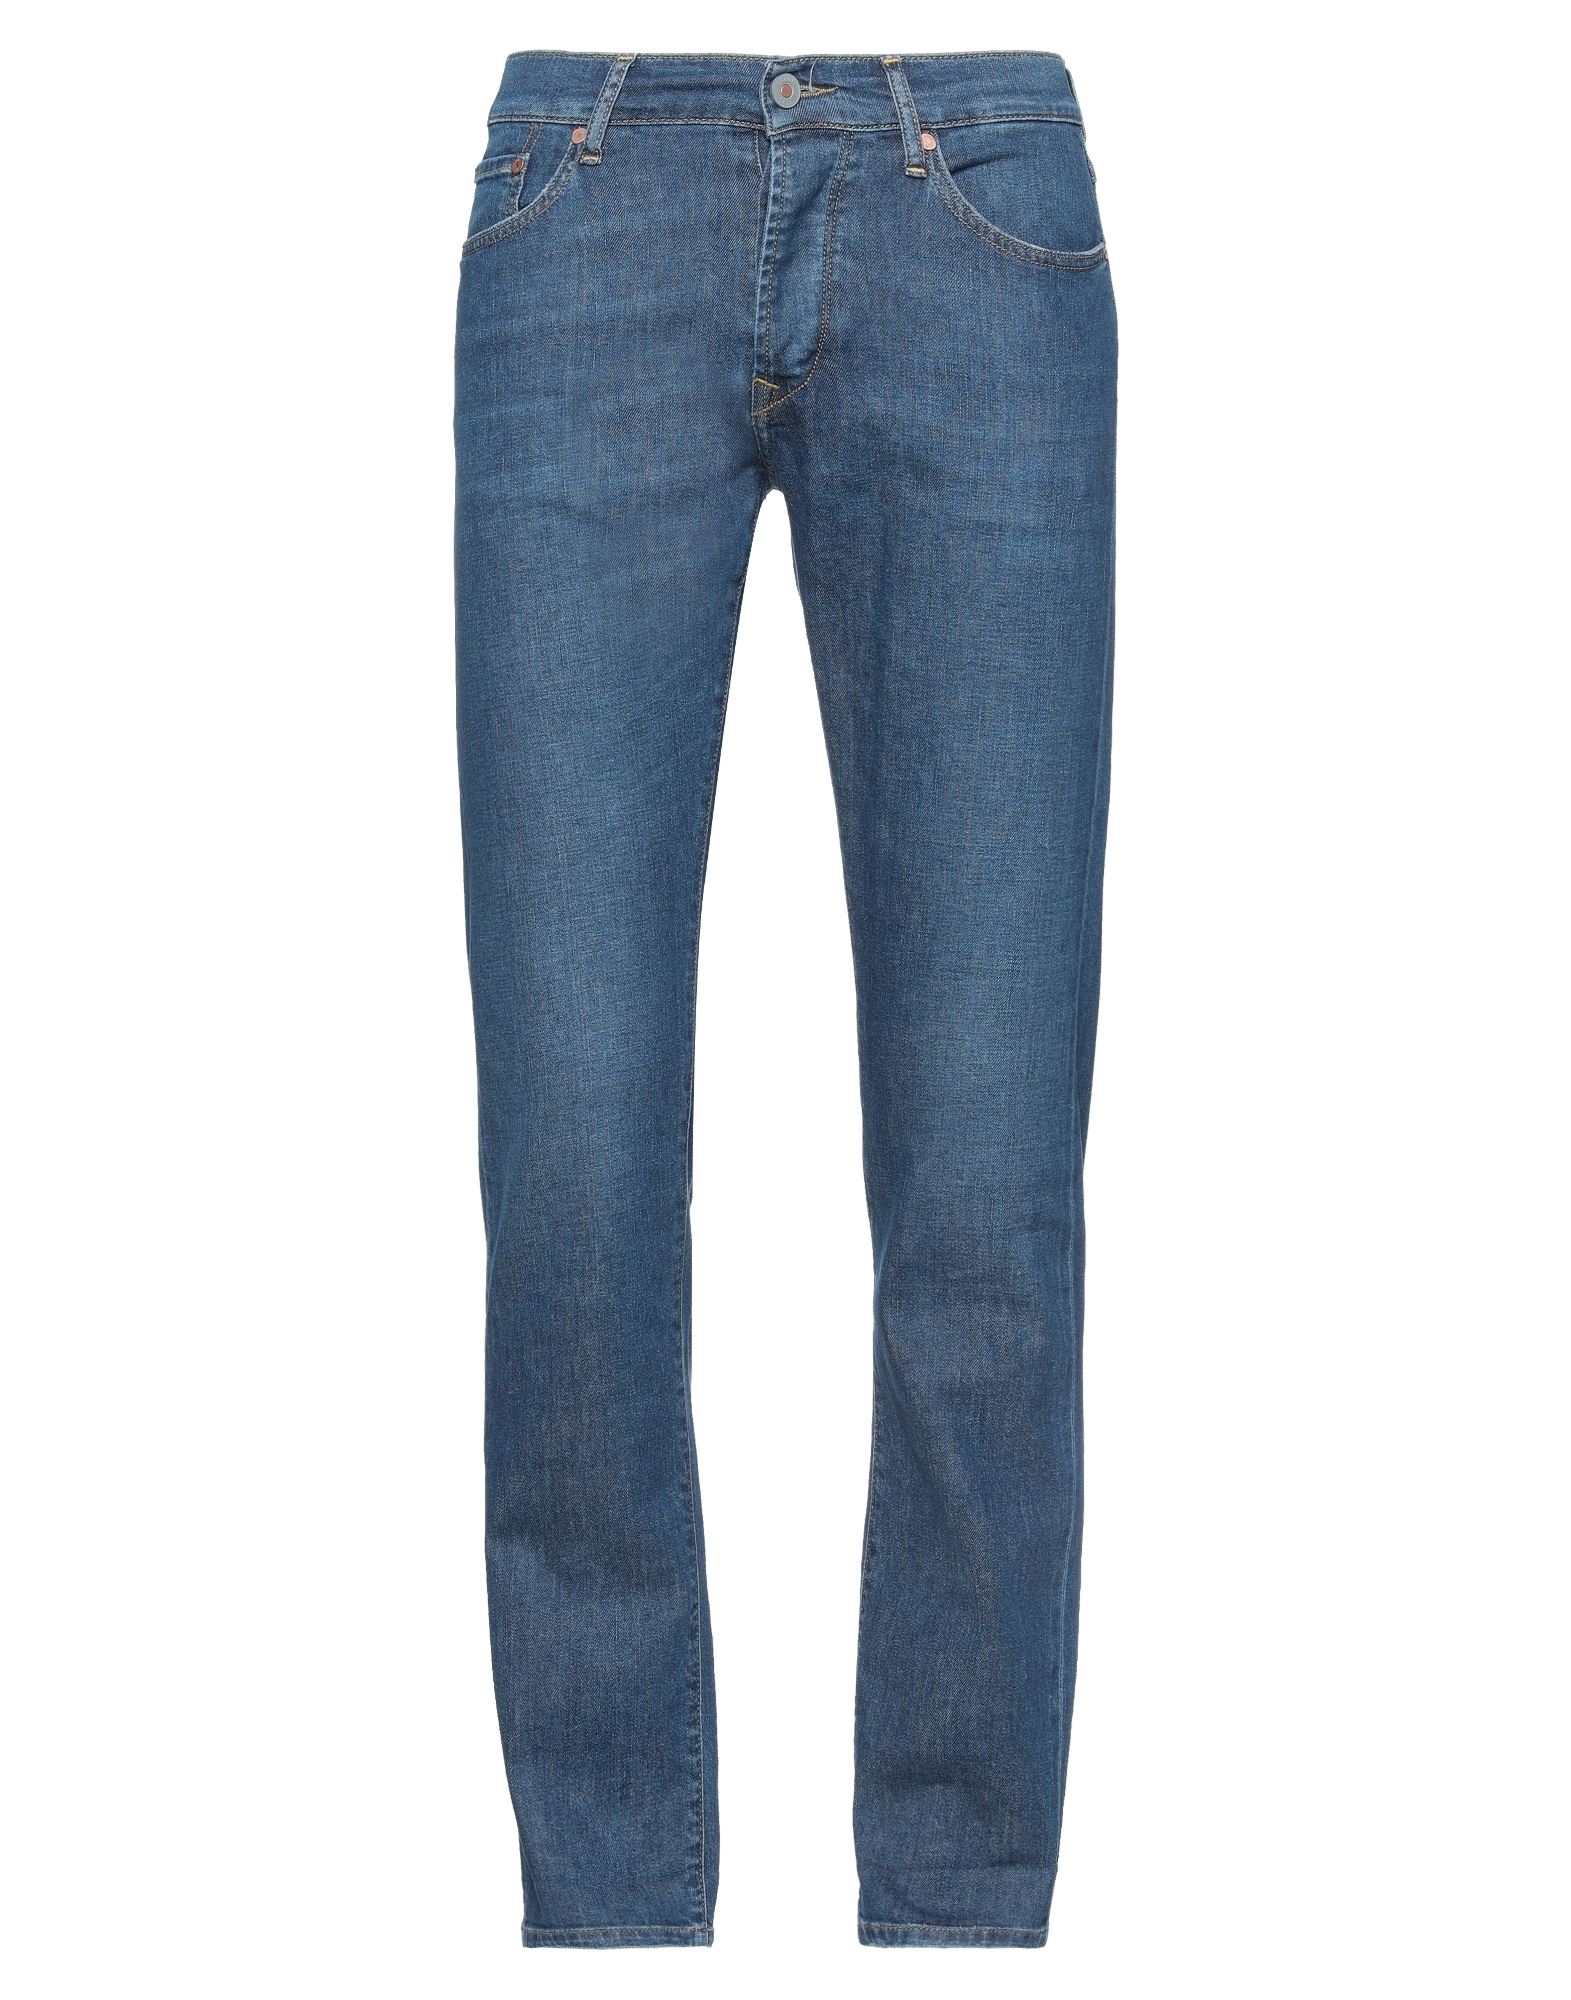 TELA GENOVA Jeans | Smart Closet